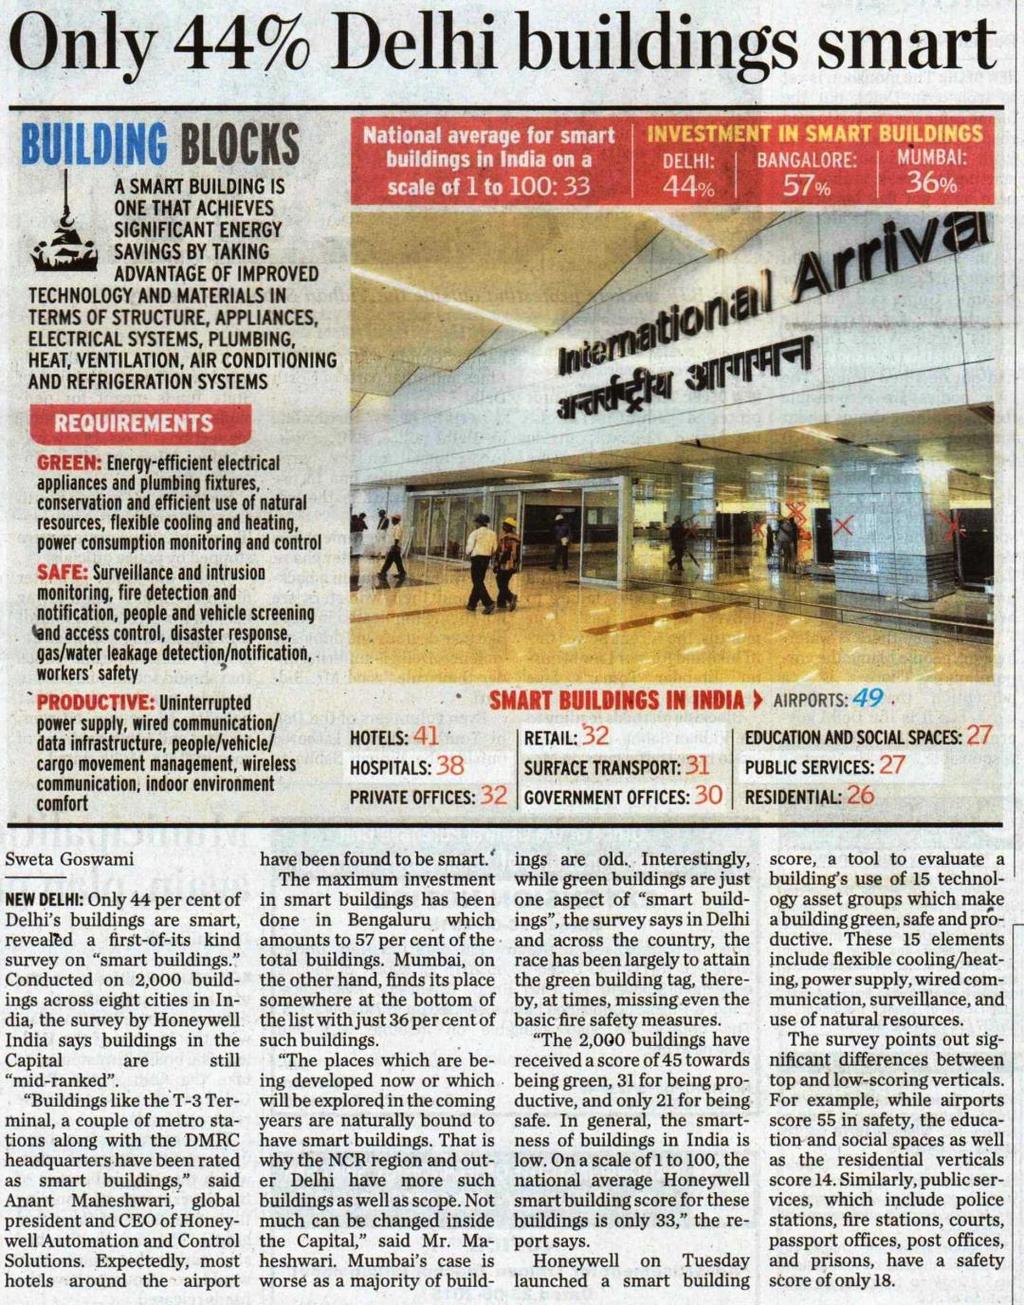 Headline: Only 44% Delhi buildings smart Publication: The Hindu Link: http://www.thehindu.com/news/cities/delhi/only-44-delhi-buildings-smart/article7348380.